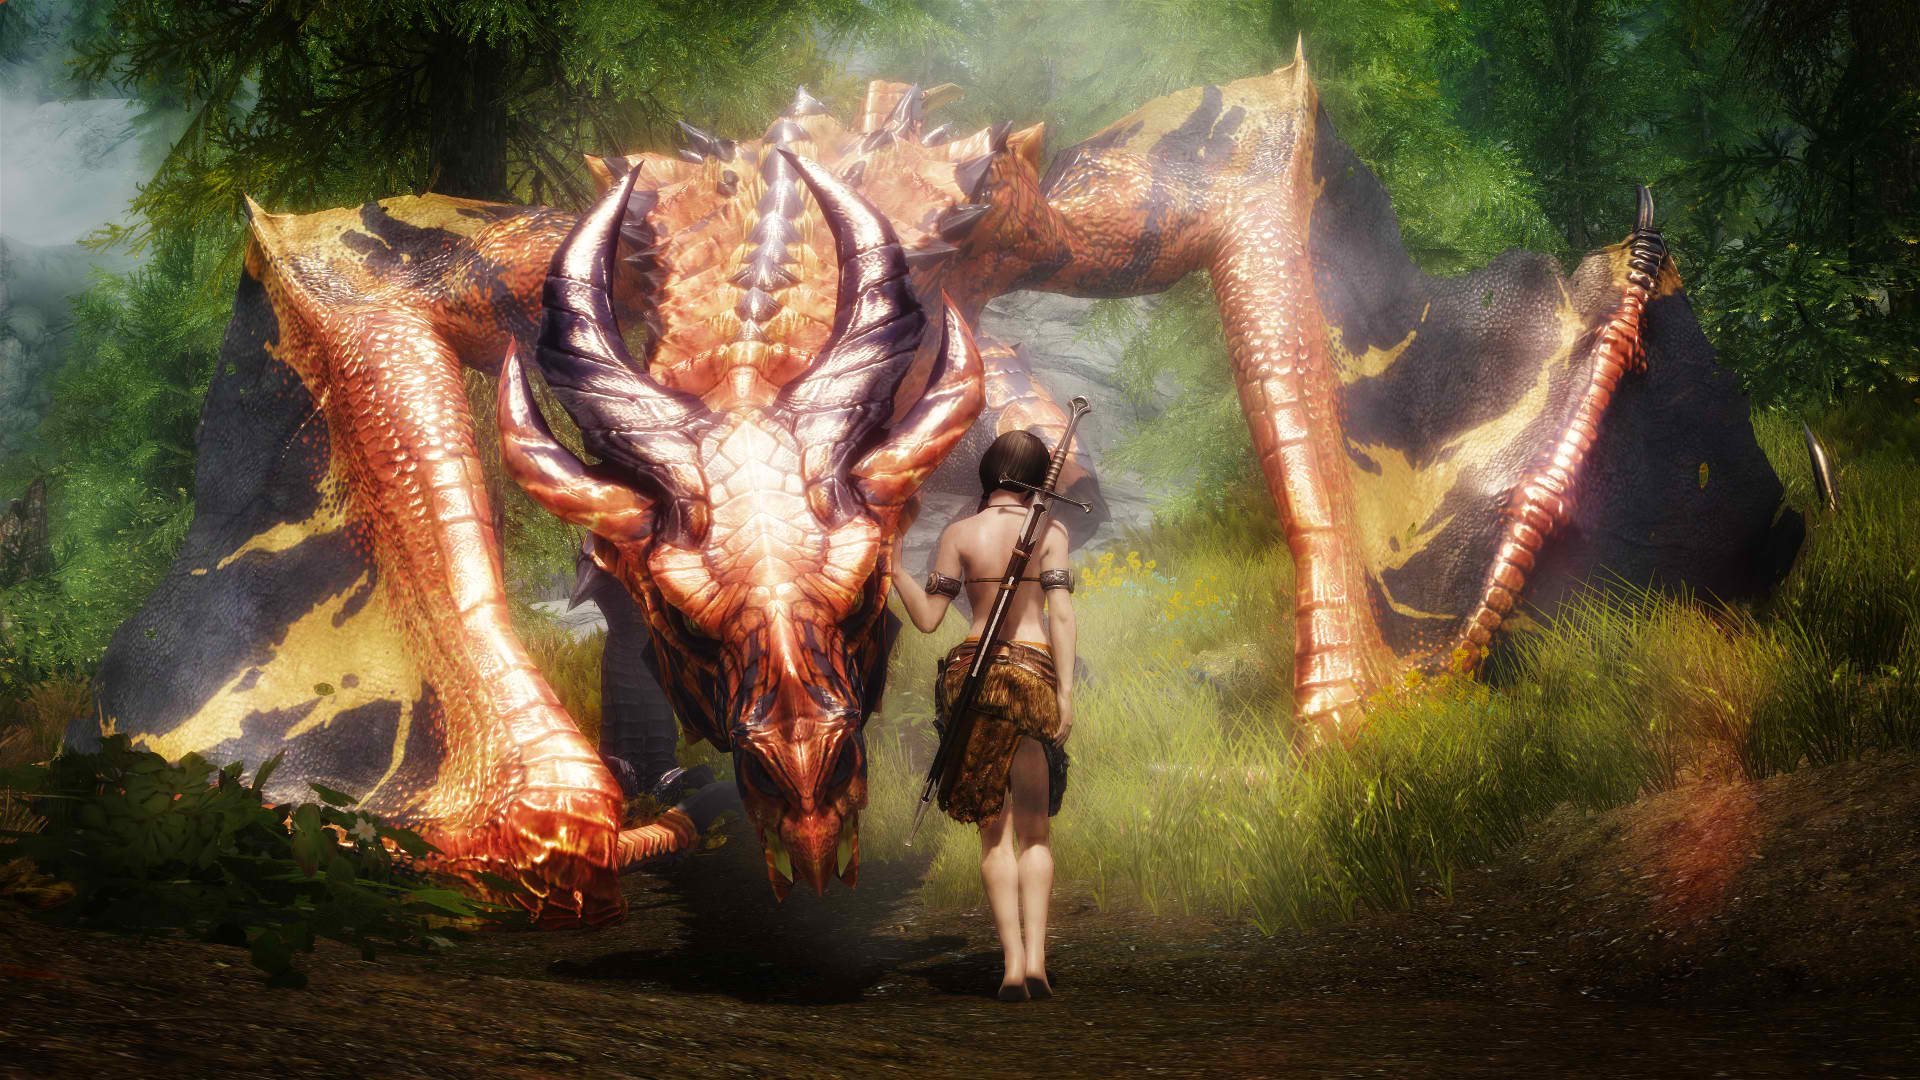 skyrim dragons screenshots - 19